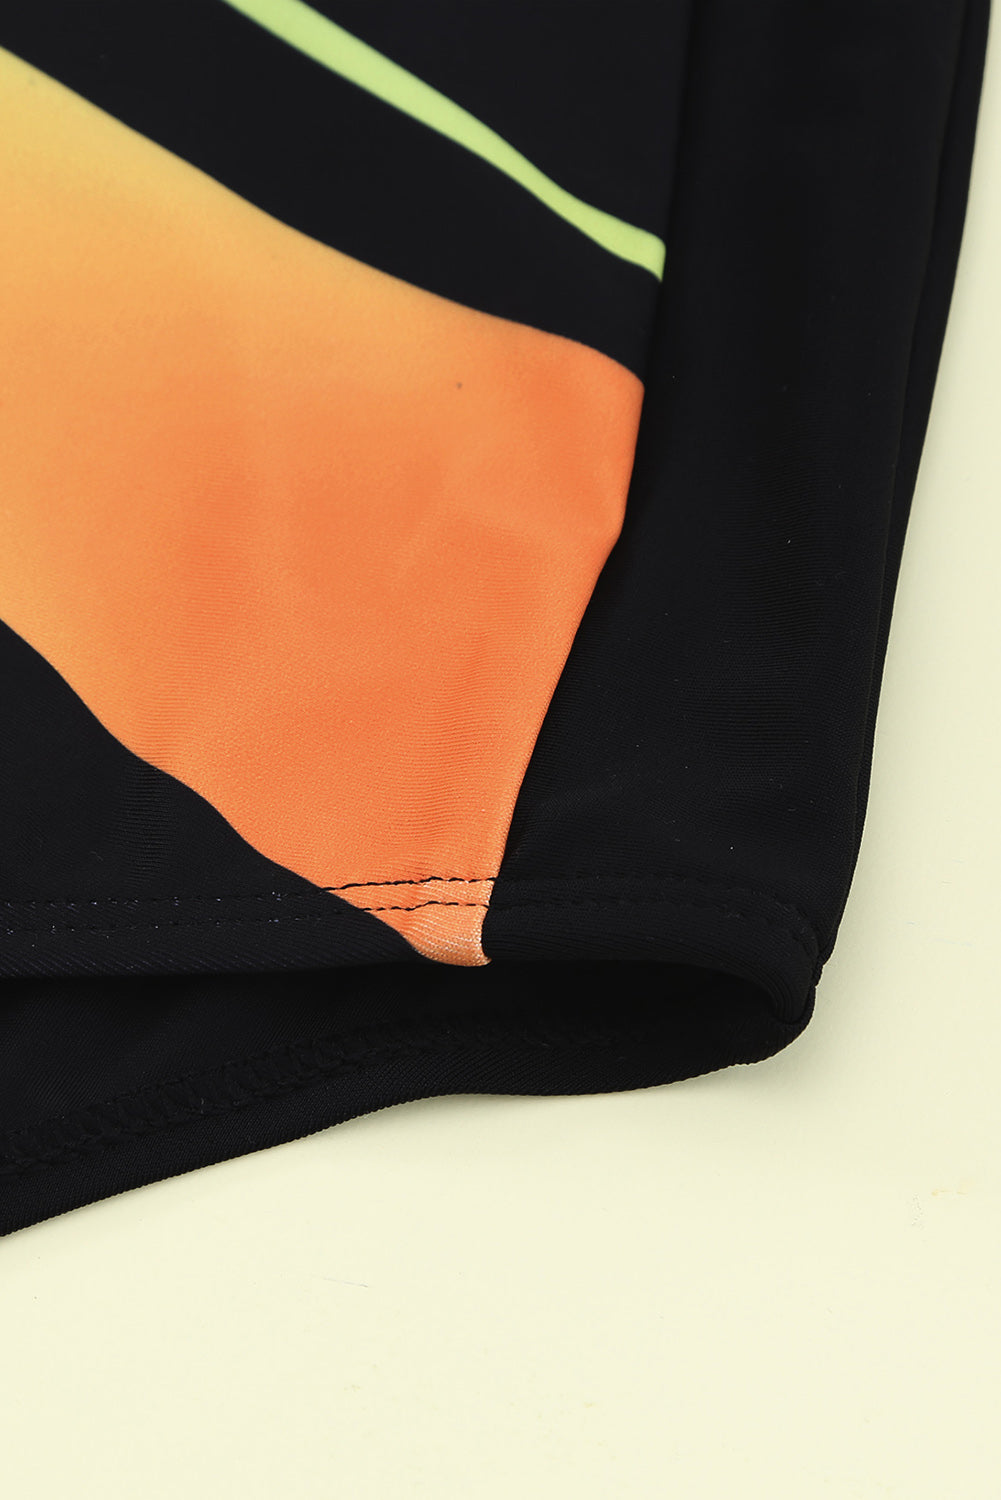 Women's Black and Orange Print One-piece Swimsuit